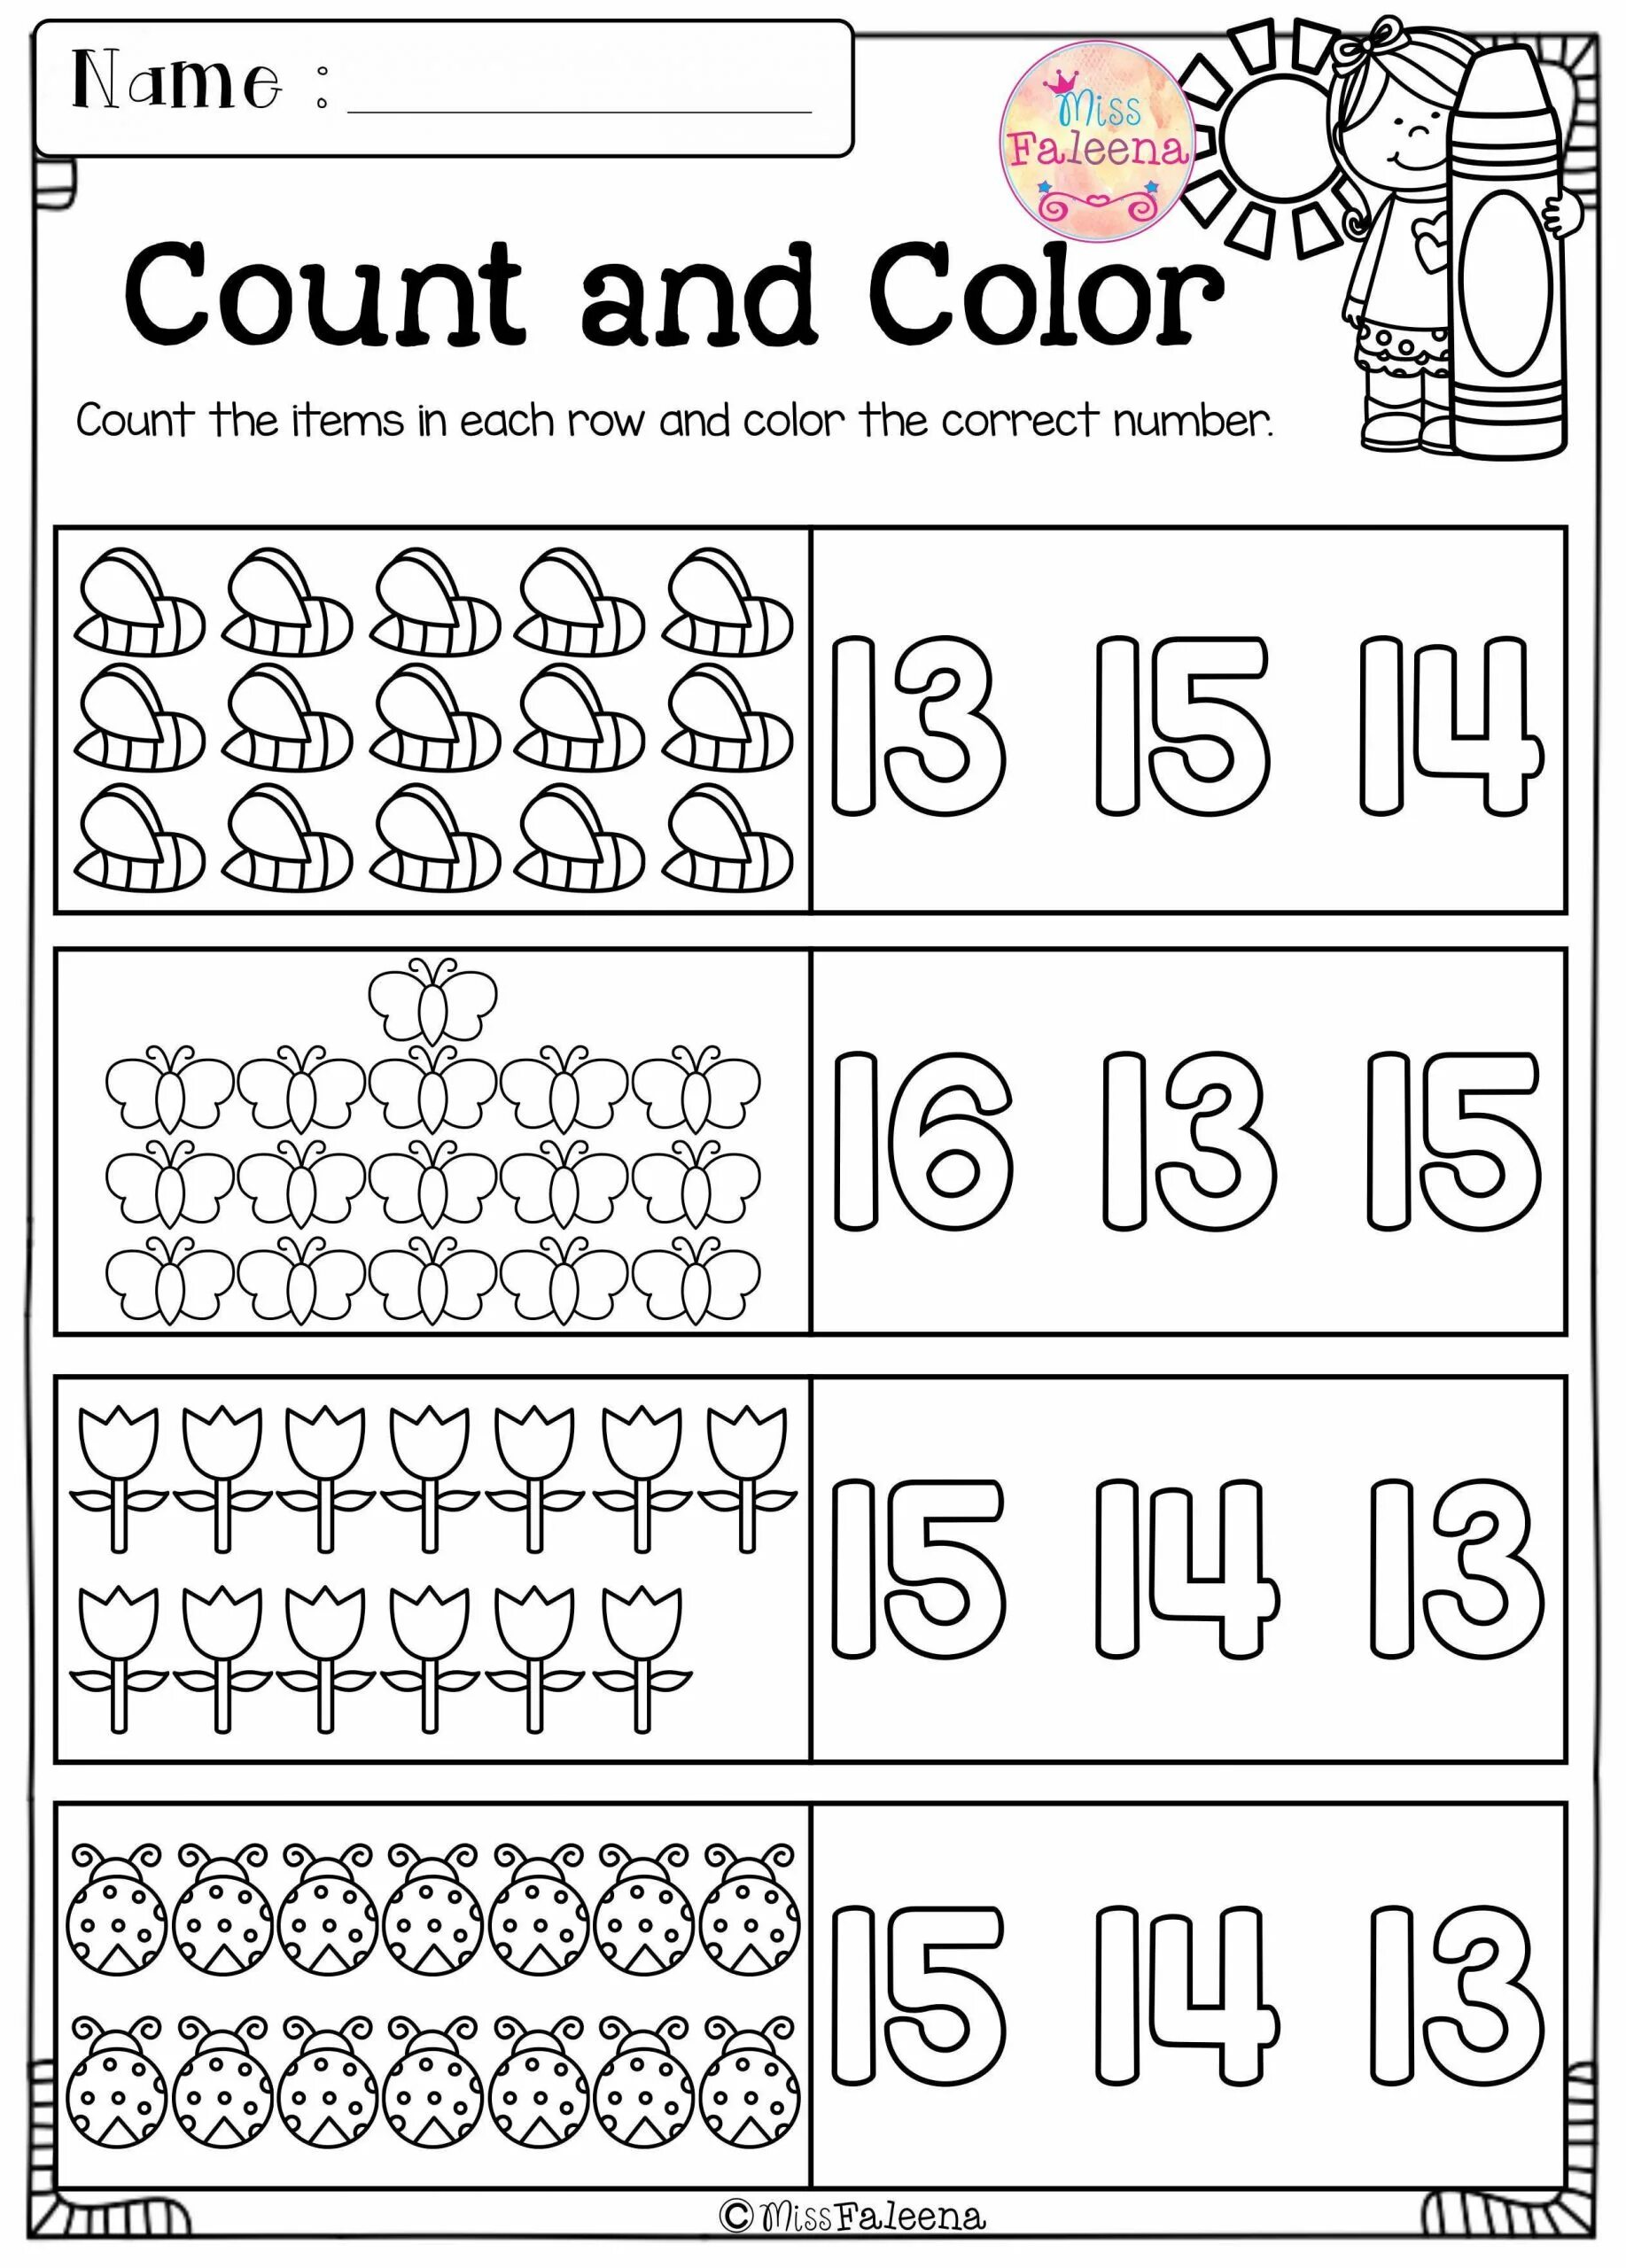 Numbers 1 20 worksheets. 1-20 Worksheets for Kids. Counting Worksheets for Kids 11-20. Count Worksheets 1-20. Count 1-20 Worksheets for Kids.